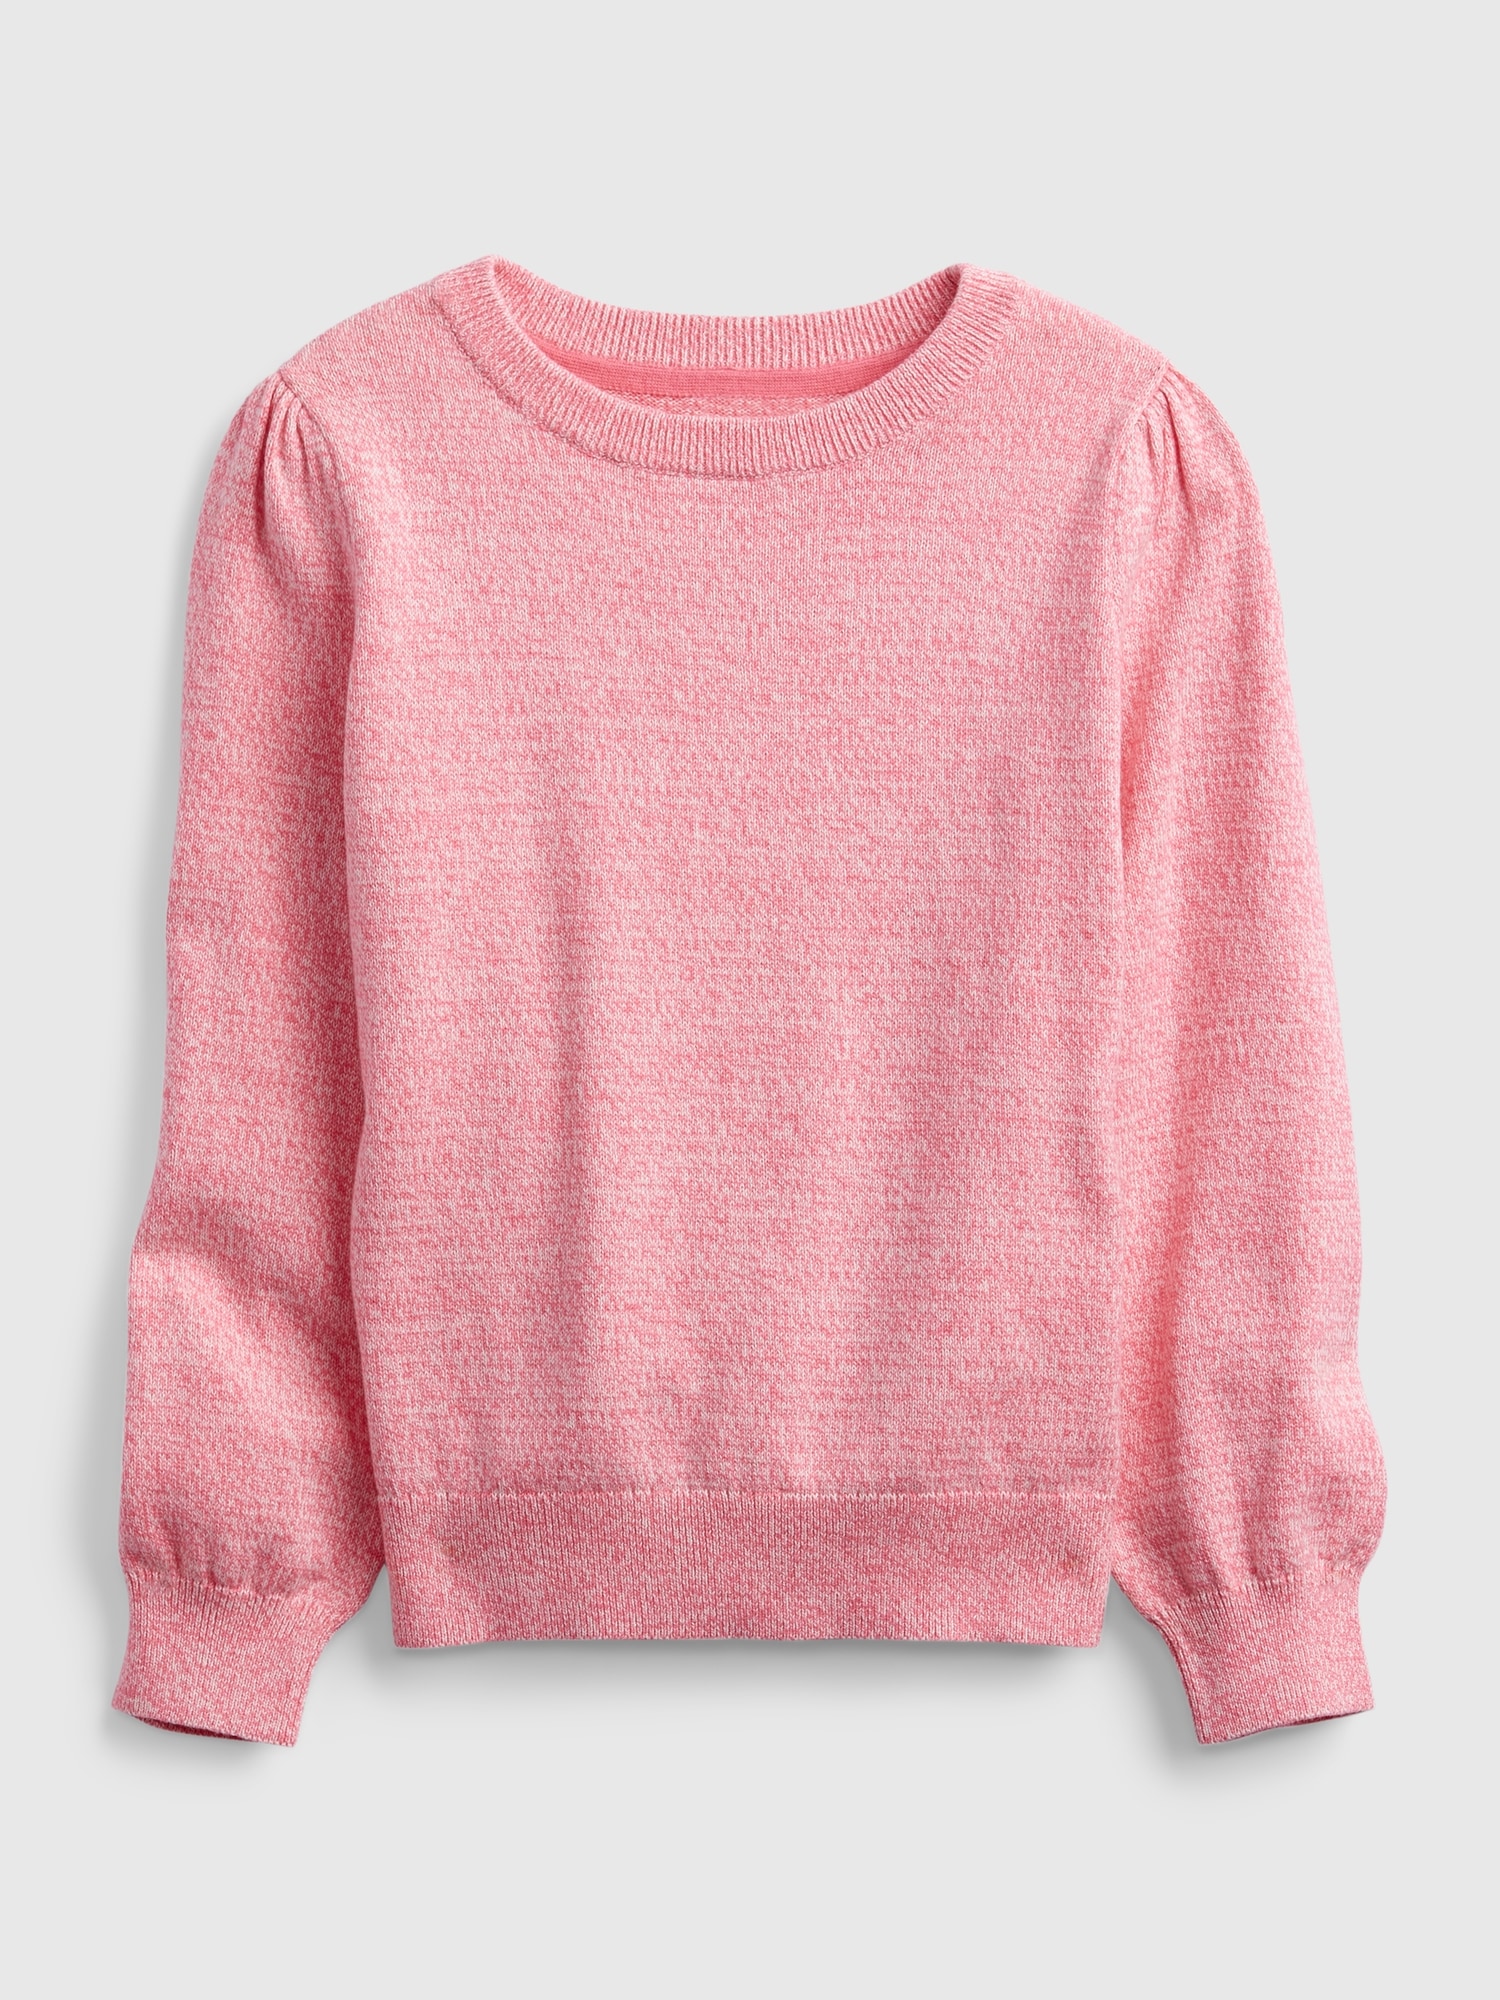 Kids Crewneck Sweater | Gap